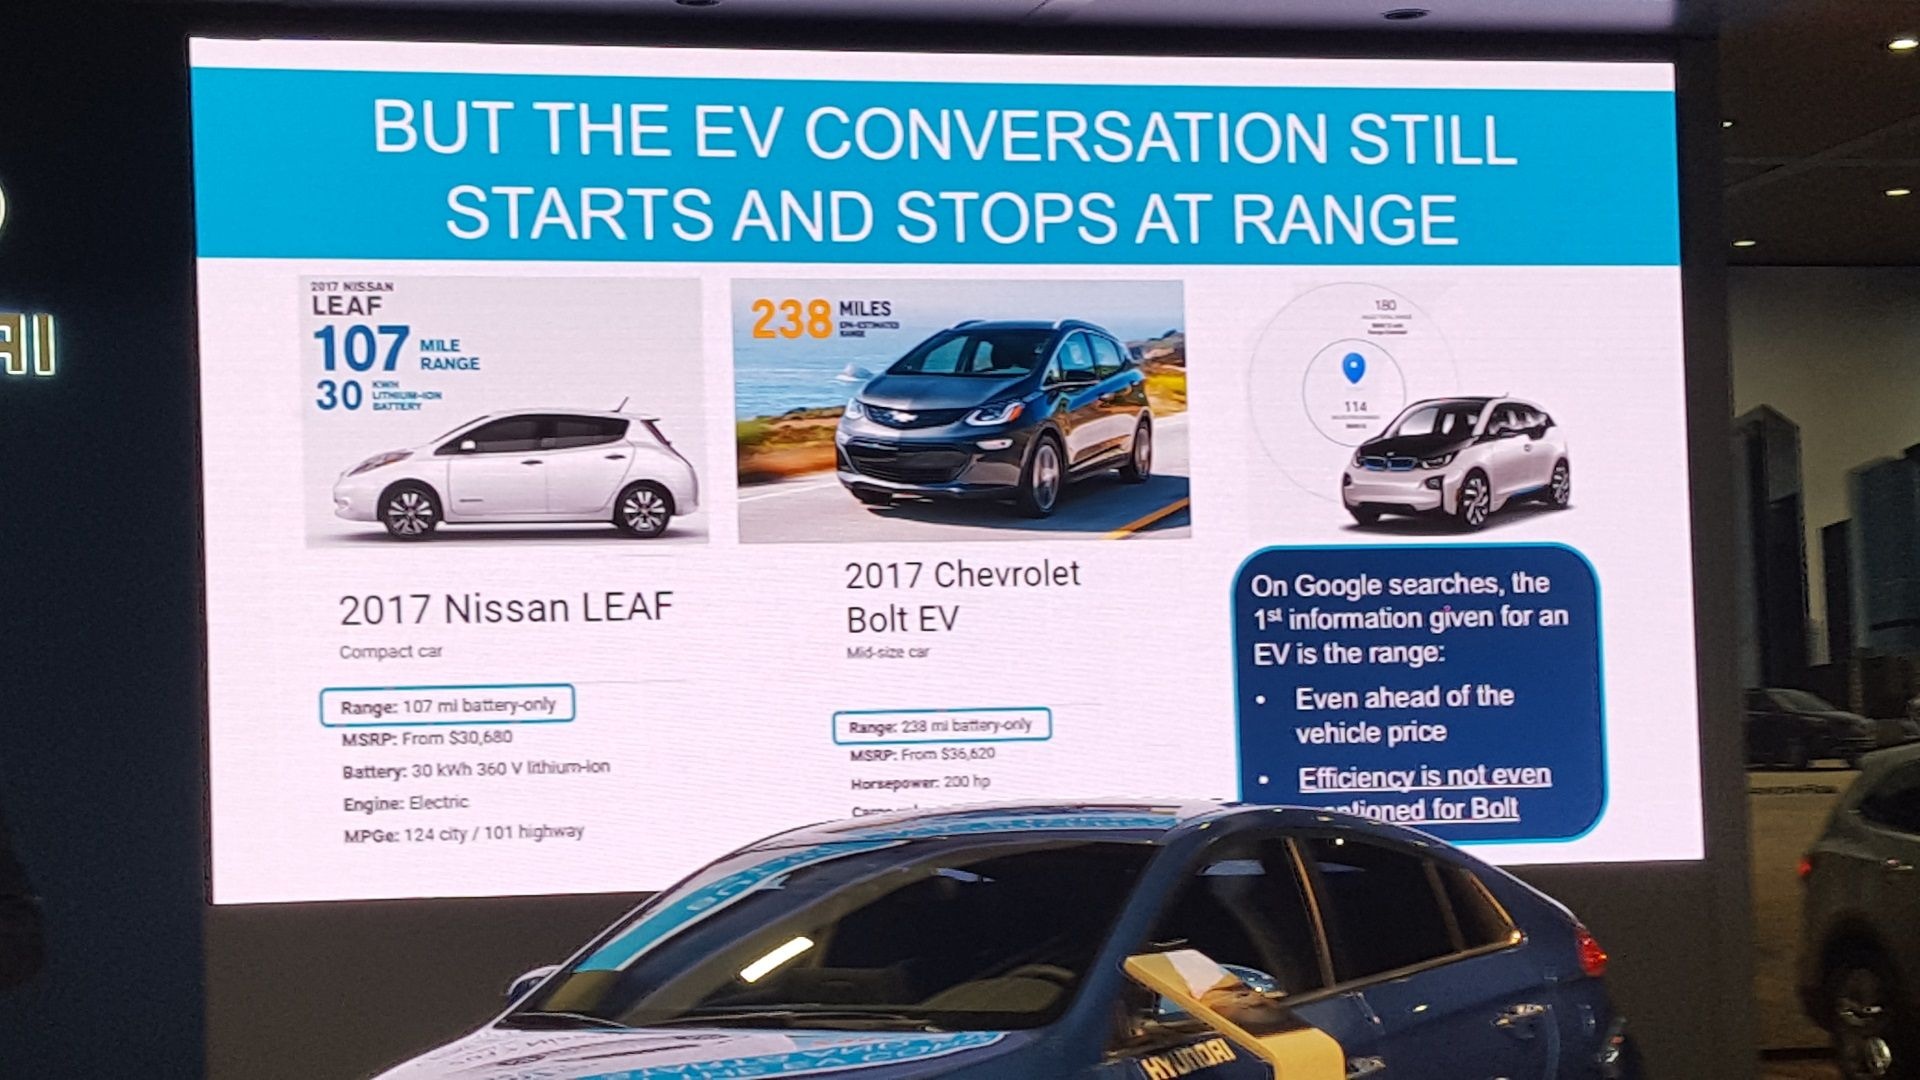 Slide from 2017 Hyundai Ioniq presentation on electric cars at Washington Auto Show, Jan 2017